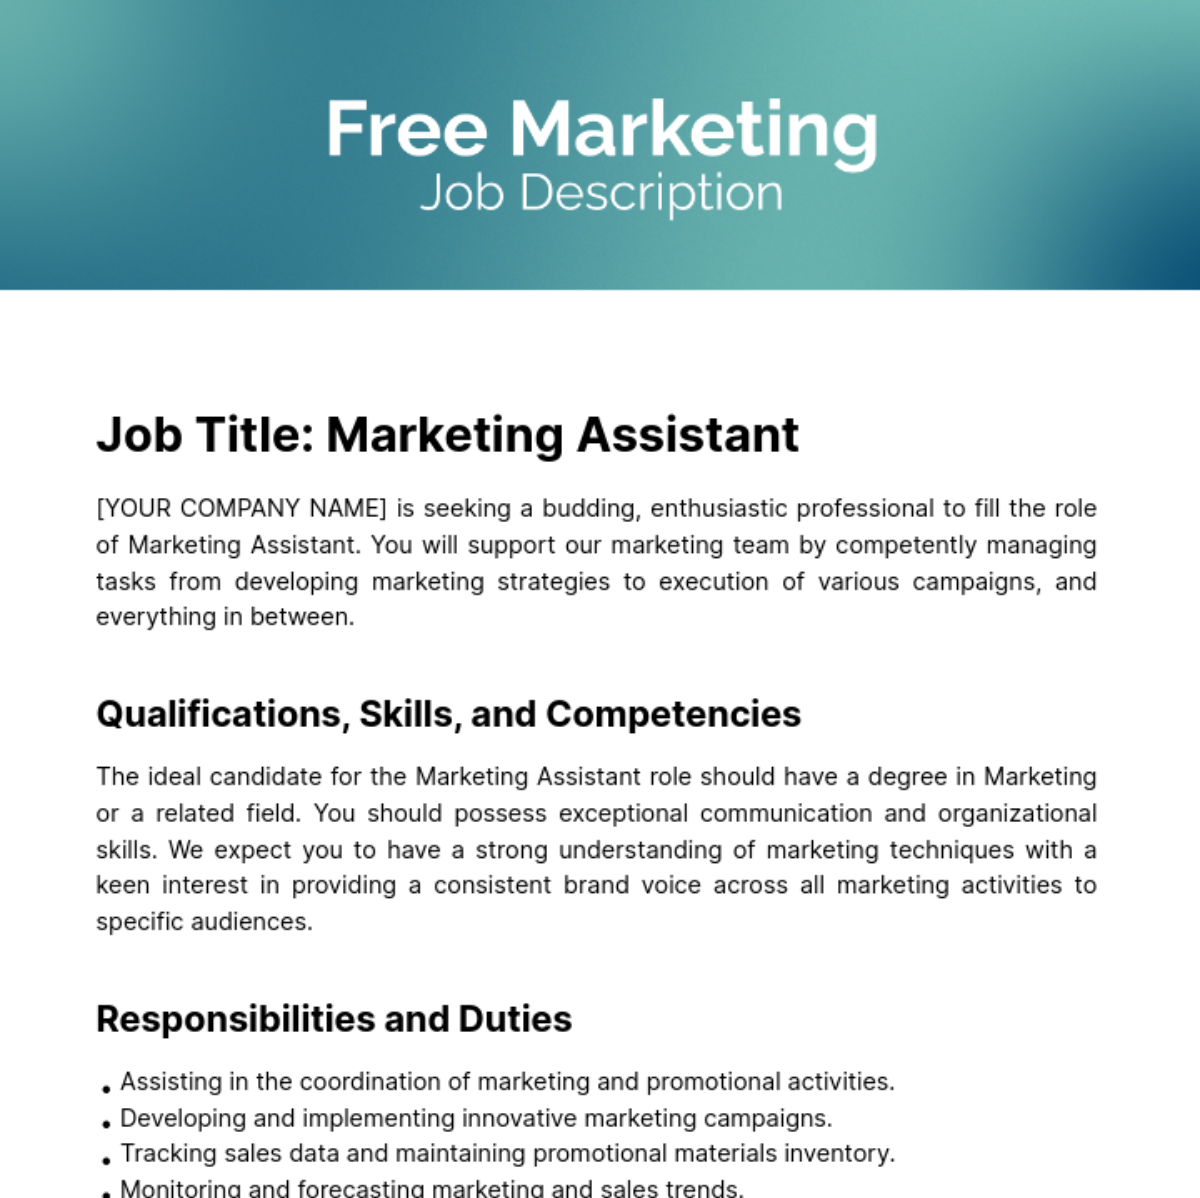 Free Marketing Job Description Template